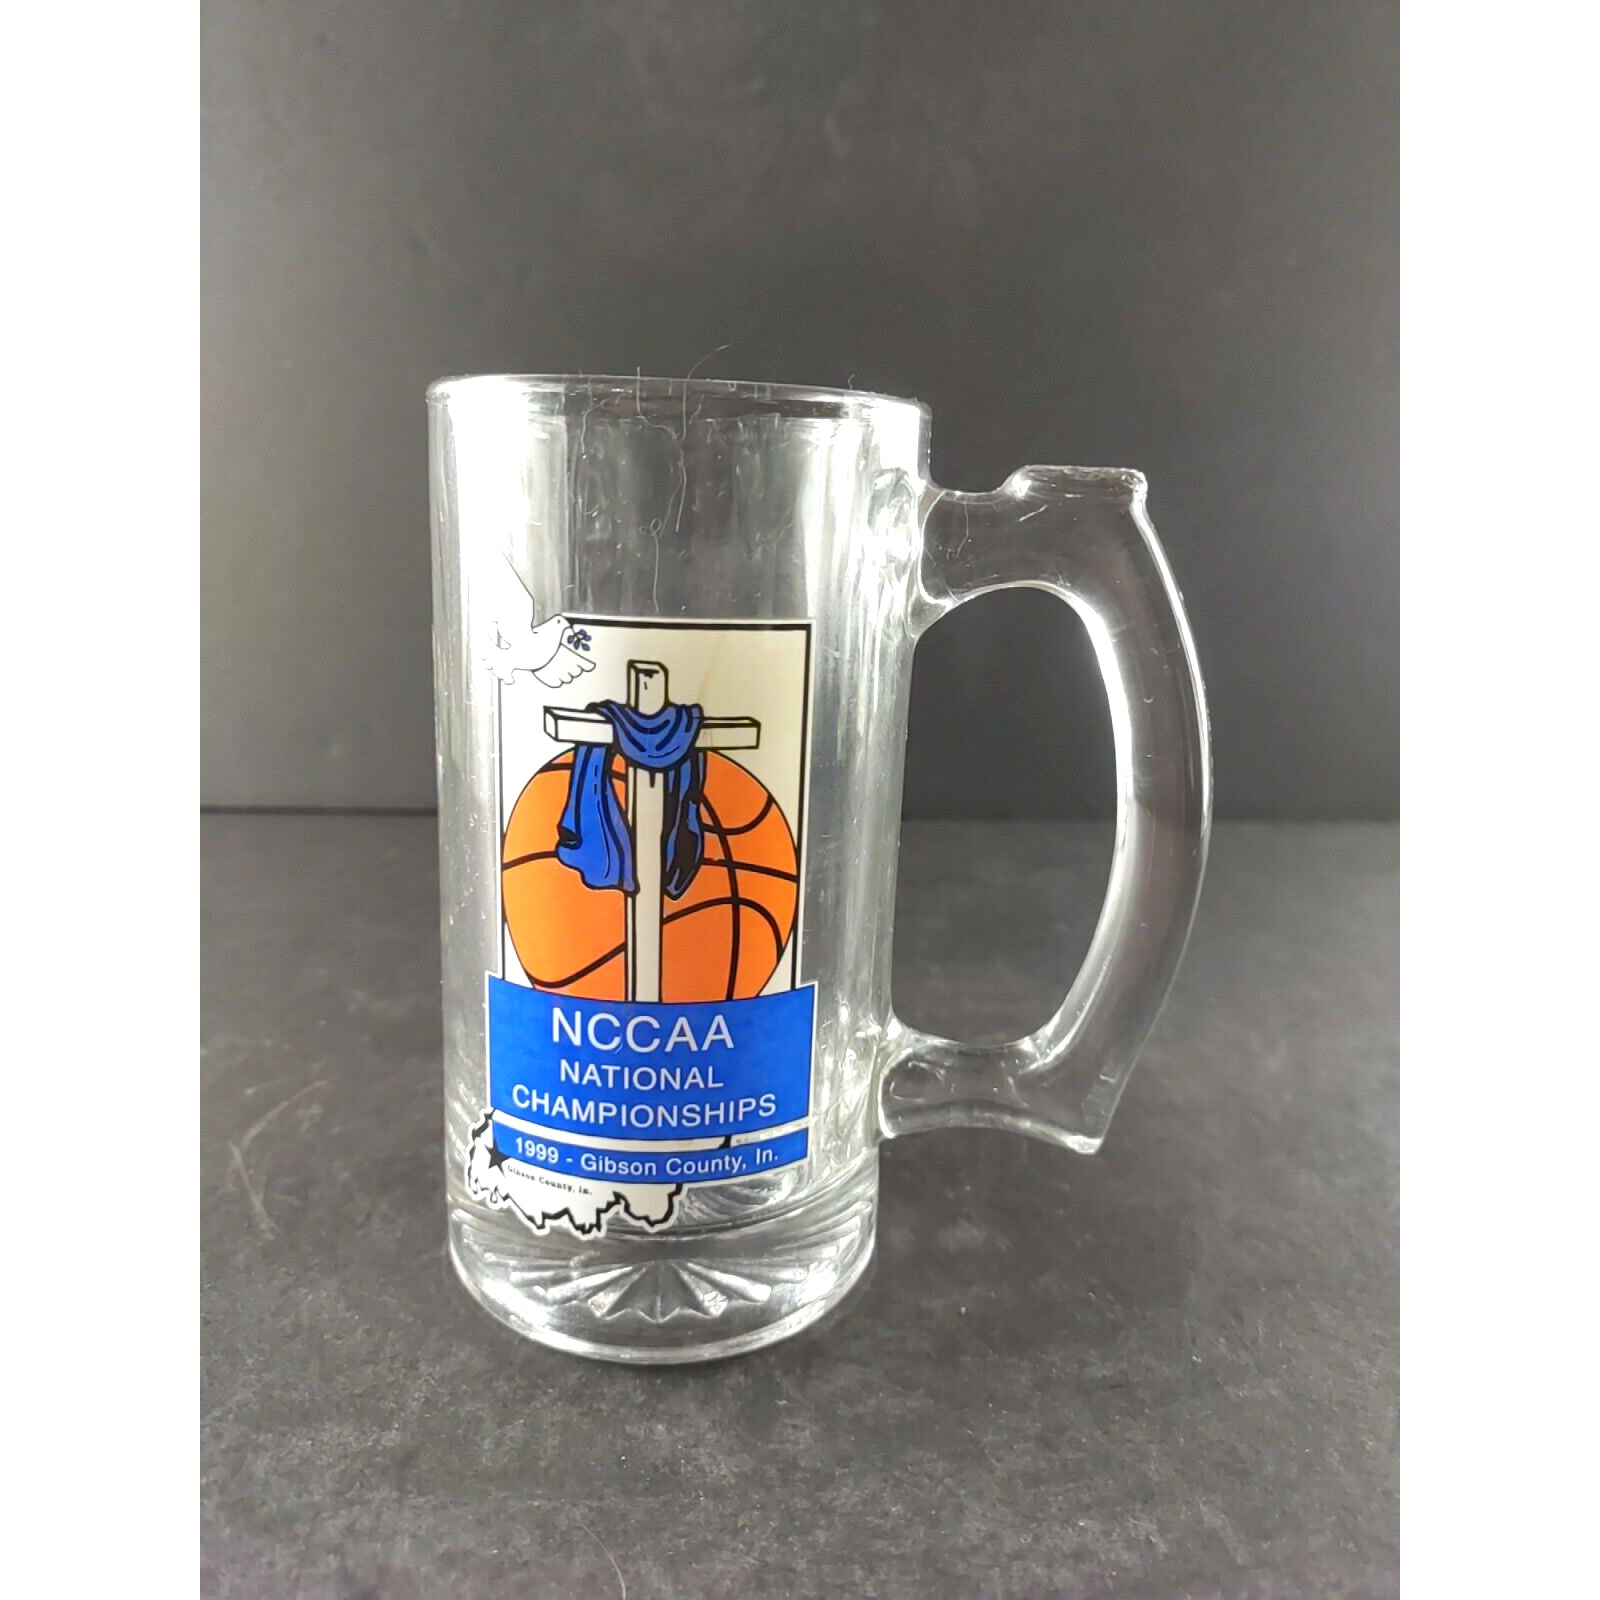 NCCAA National Championships 1999- Gibson County Indiana Beer Mug